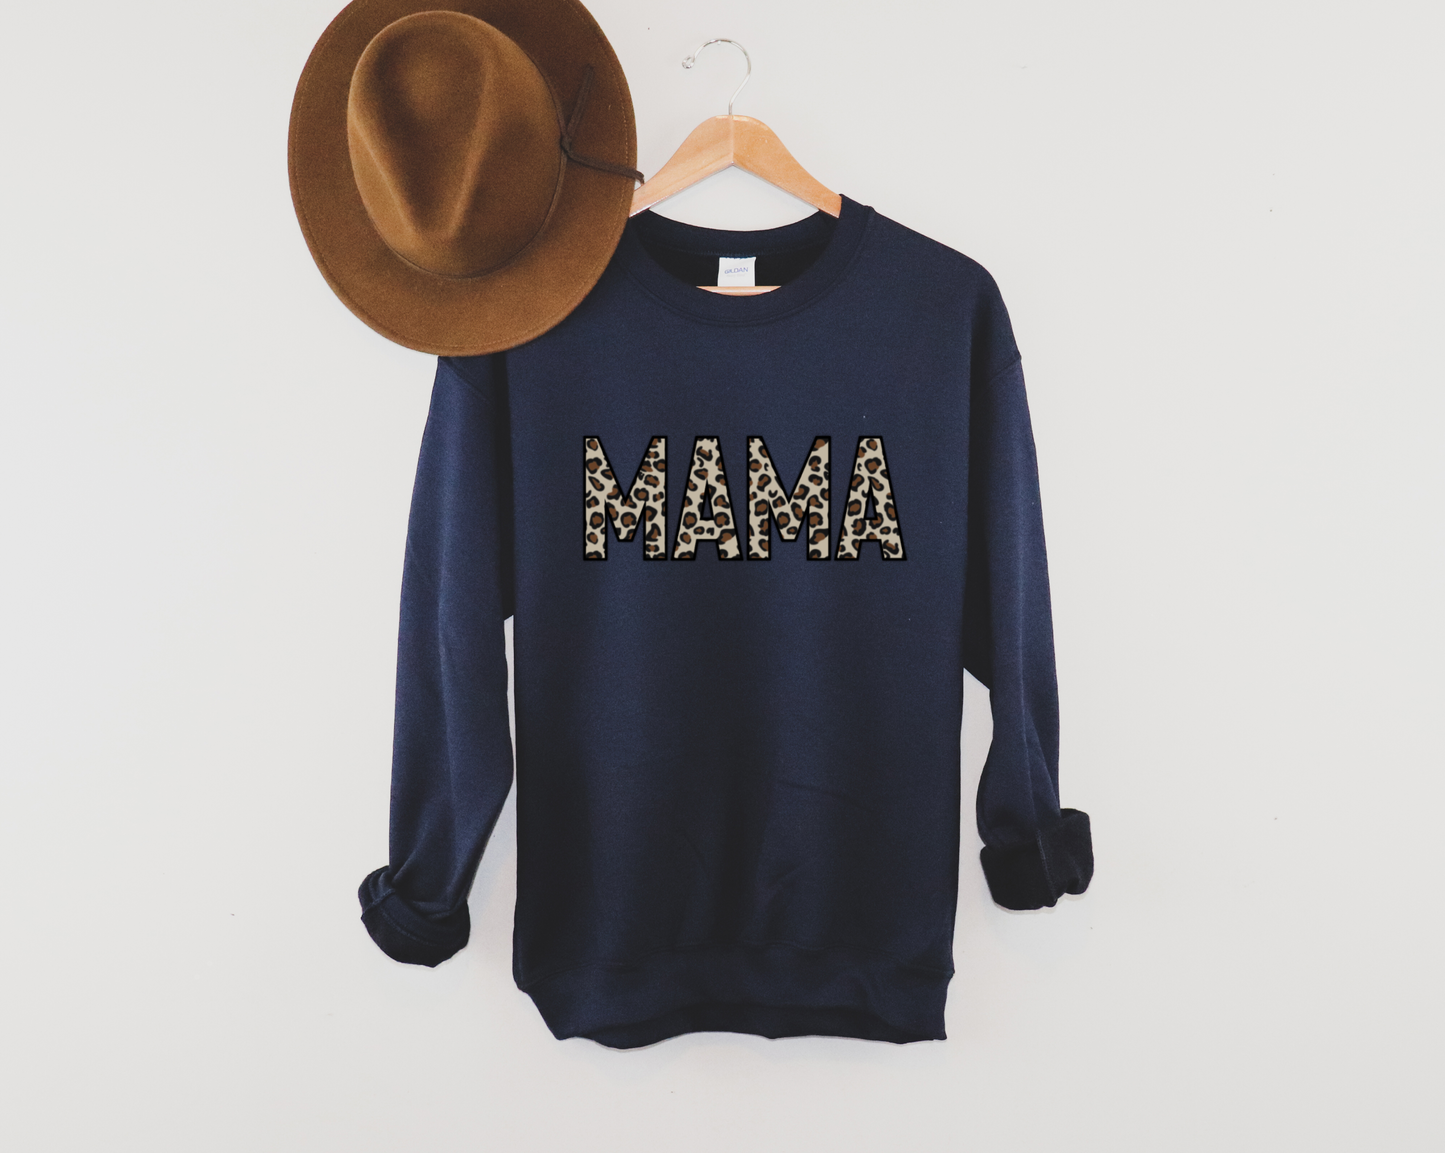 Leopard Print Mama Crewneck Sweatshirt